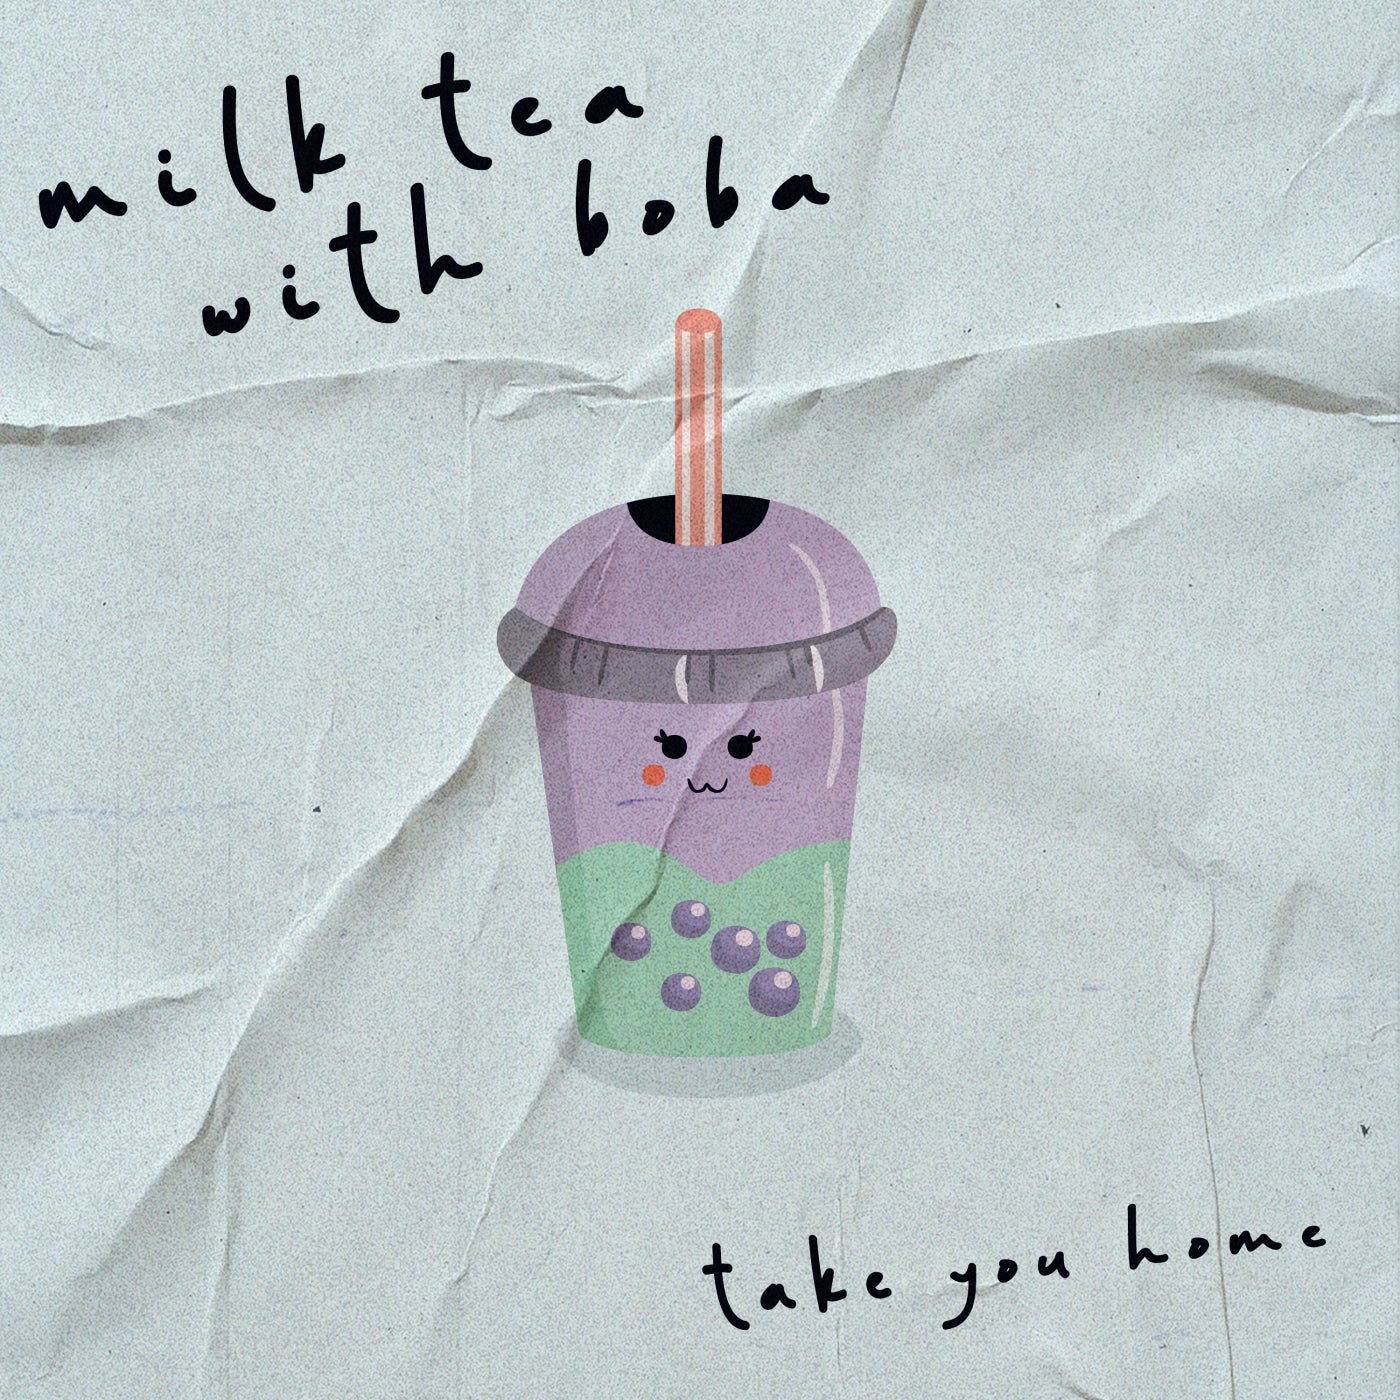 milk tea with boba – Take You Home [BOBA001]